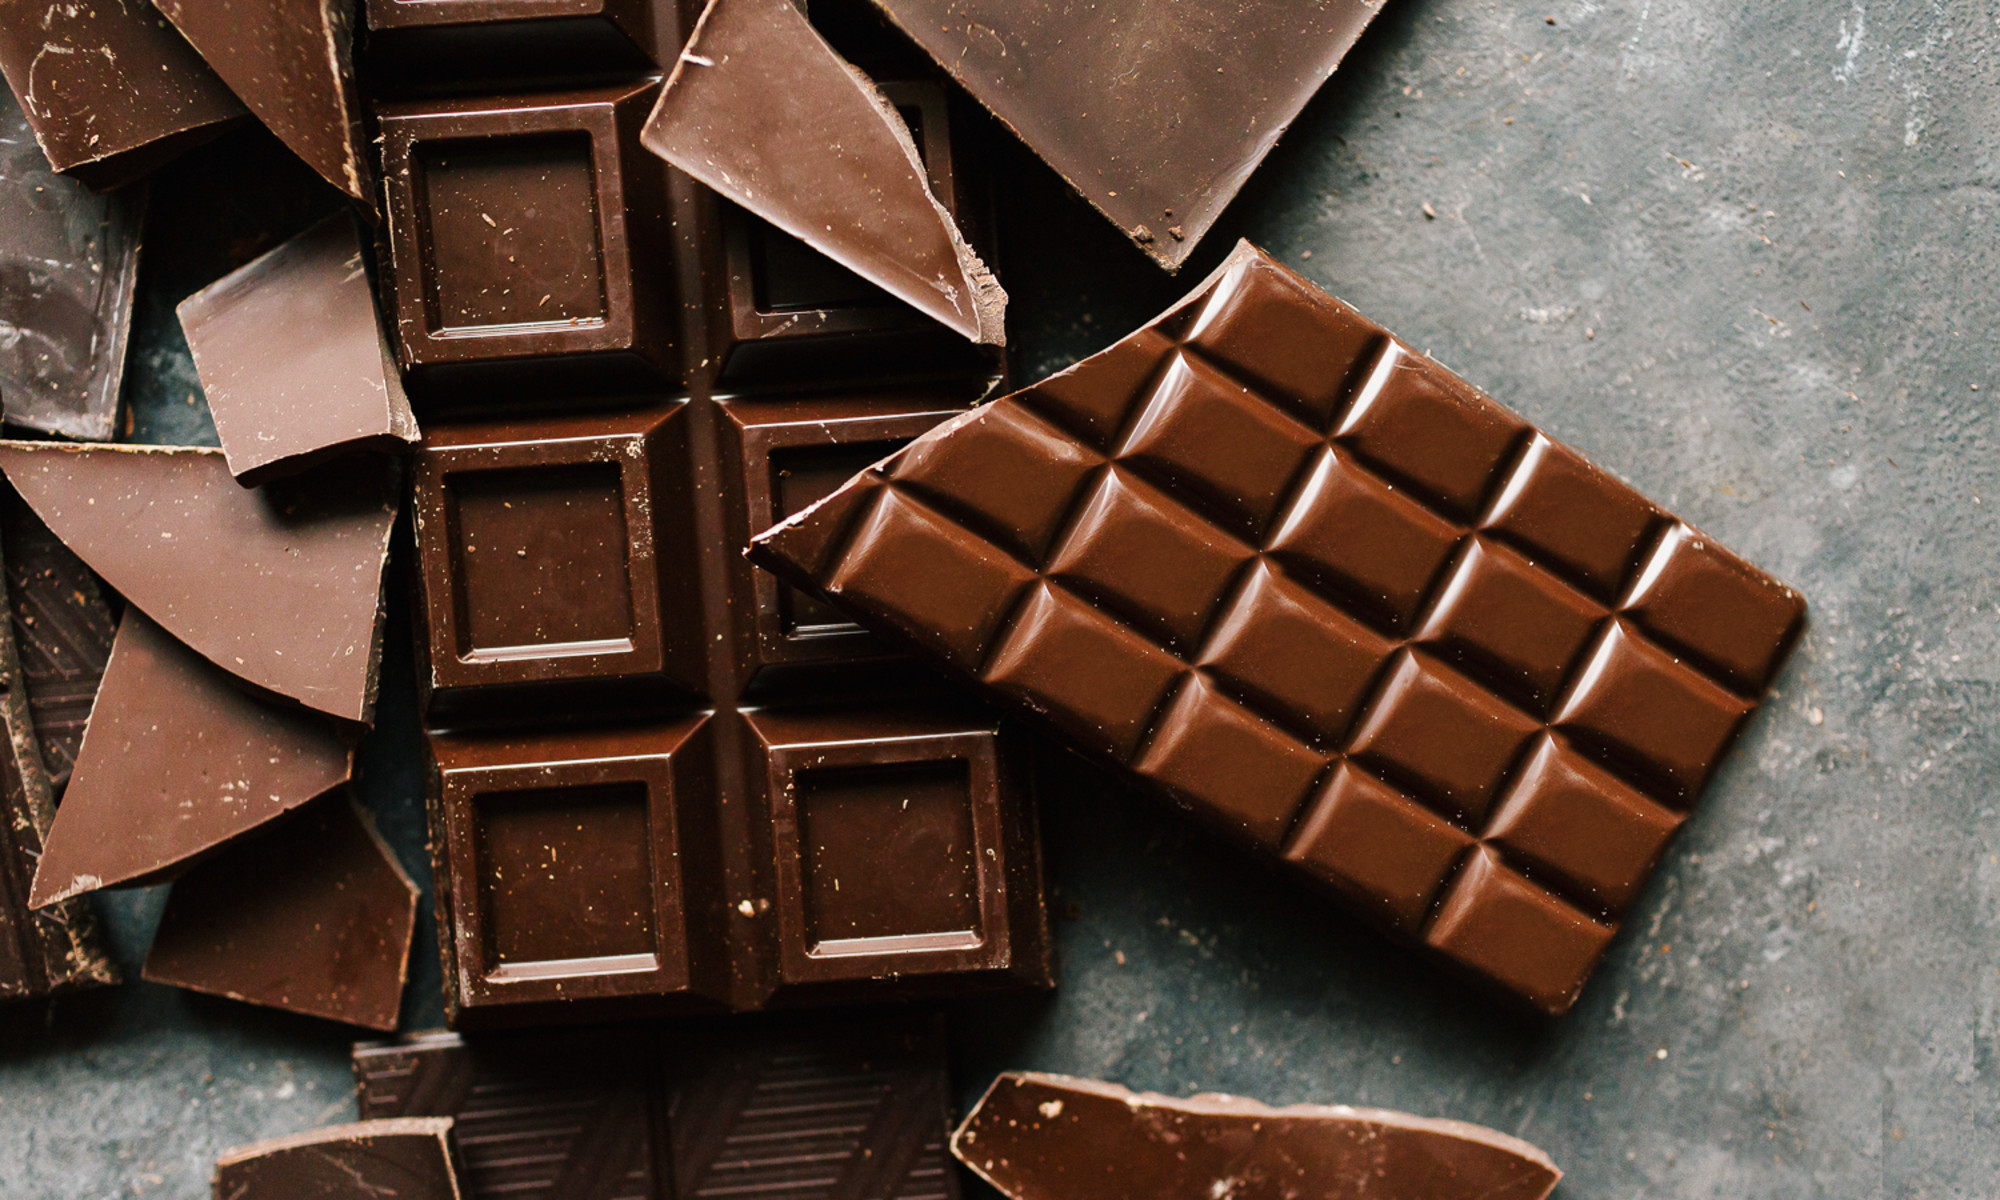 Батончик темный шоколад. Шоколад белый против чёрного. Chocolate pattern. შოკოლადი photo.